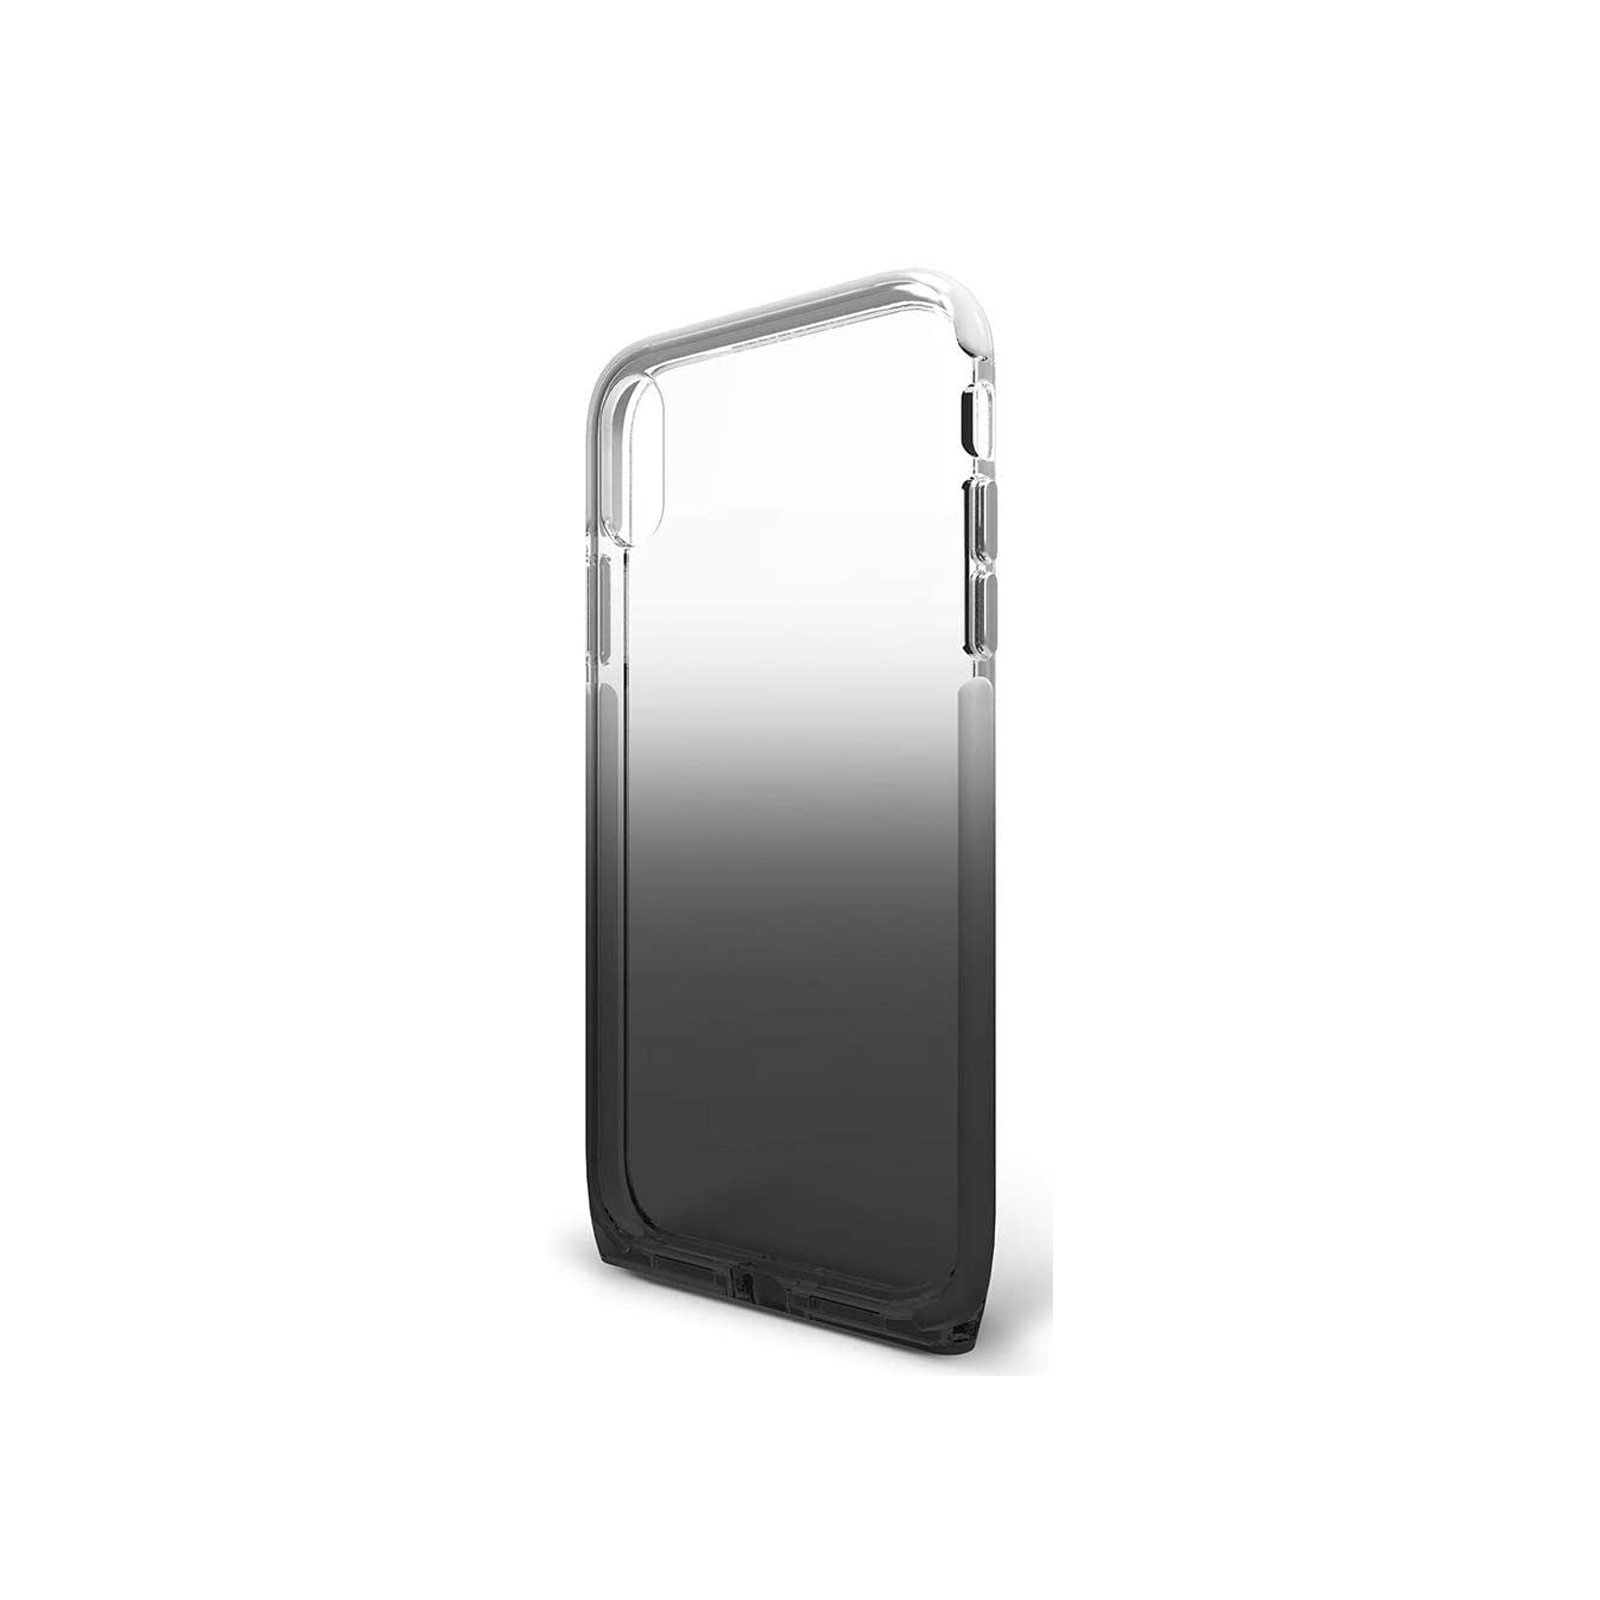 Harmony iPhone X / XS Clear / Smoke Case Brand New